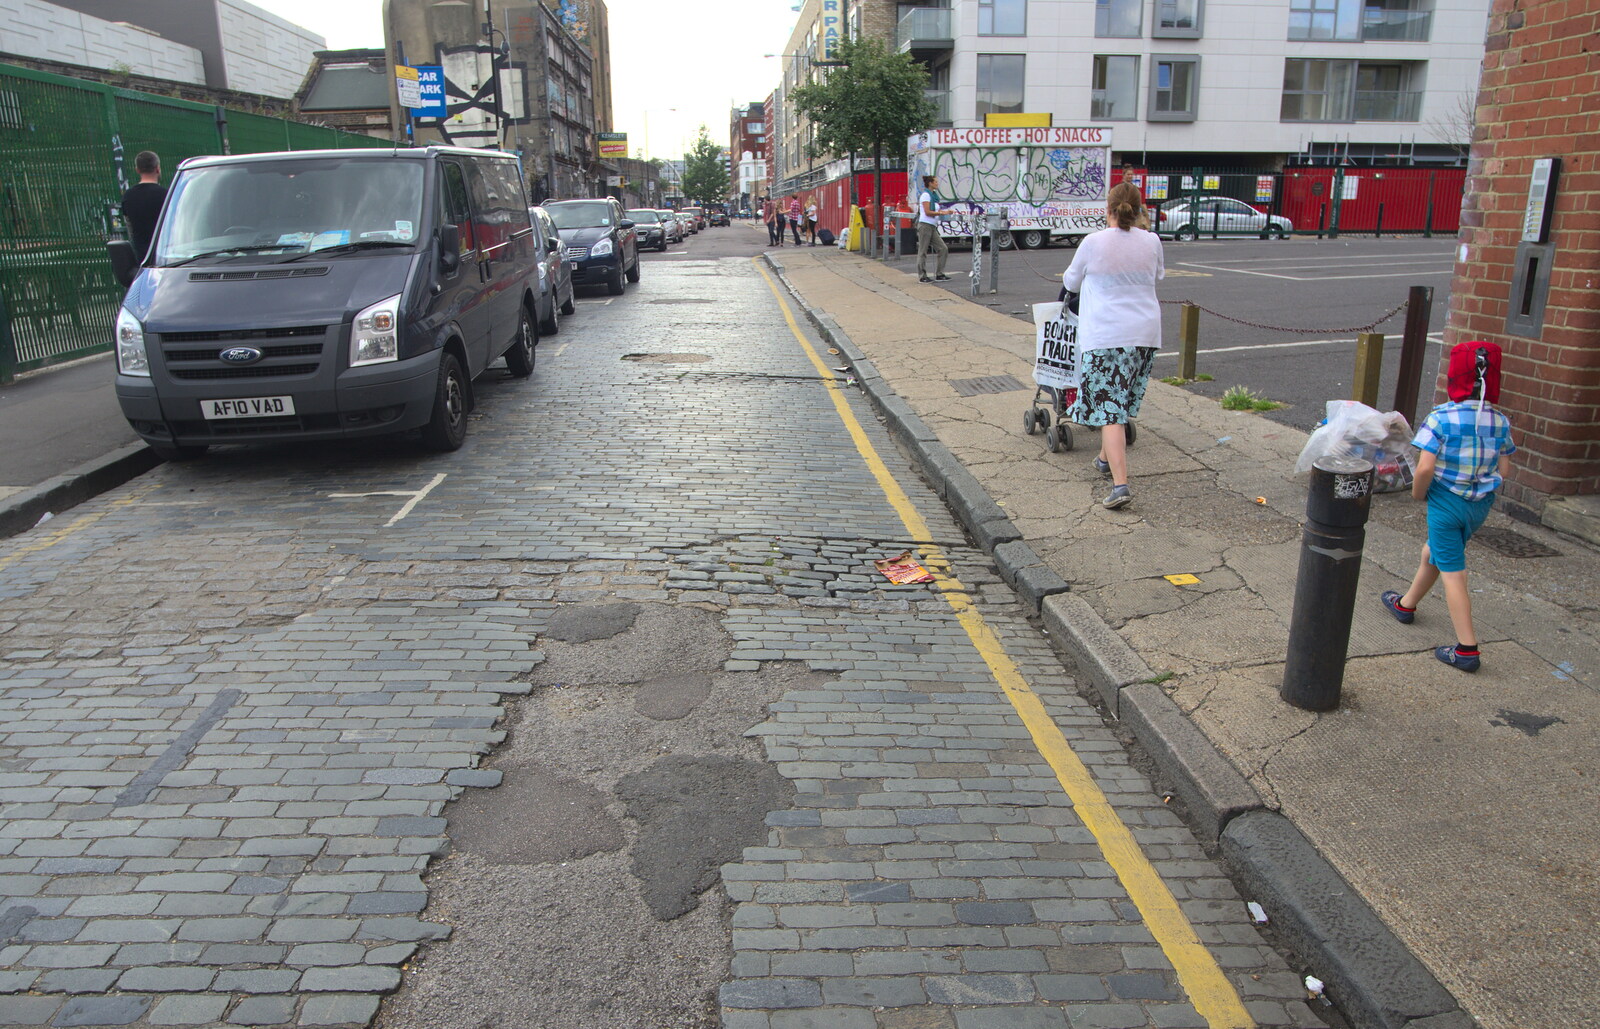 Walking down Quaker Street from Spitalfields and Brick Lane Street Art, Whitechapel, London - 10th August 2013